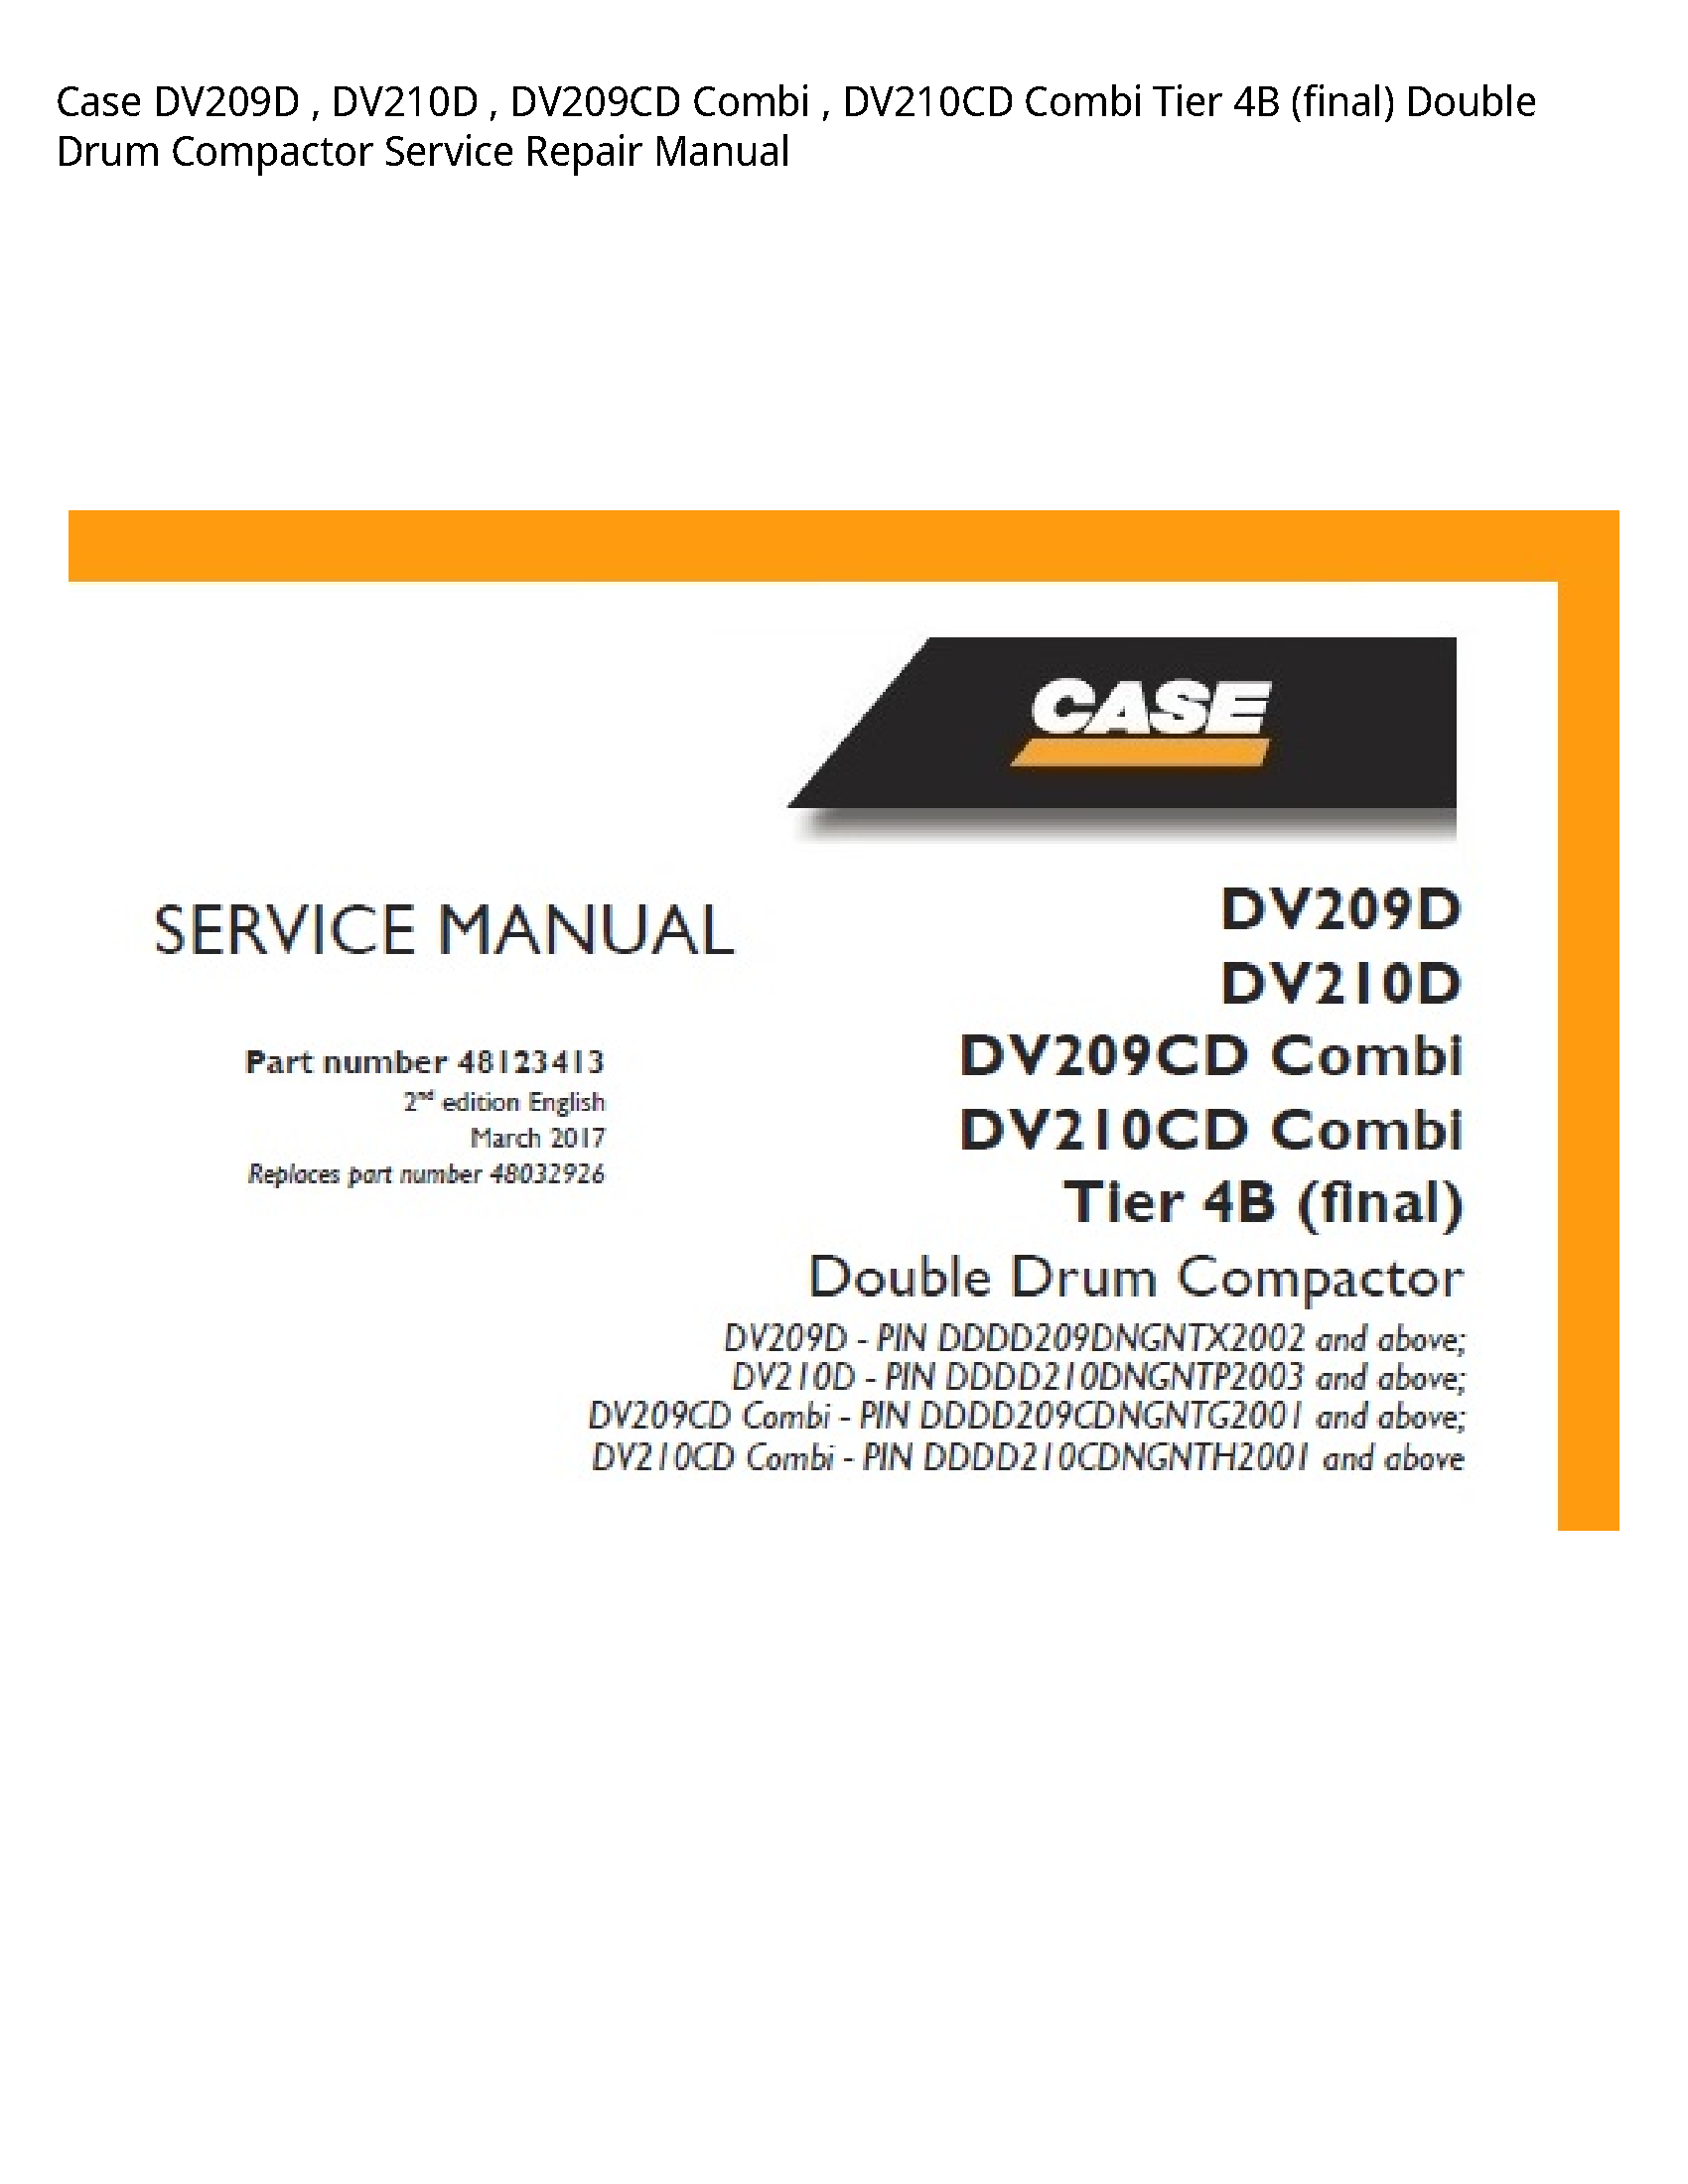 Case/Case IH DV209D Combi Combi Tier (final) Double Drum Compactor manual